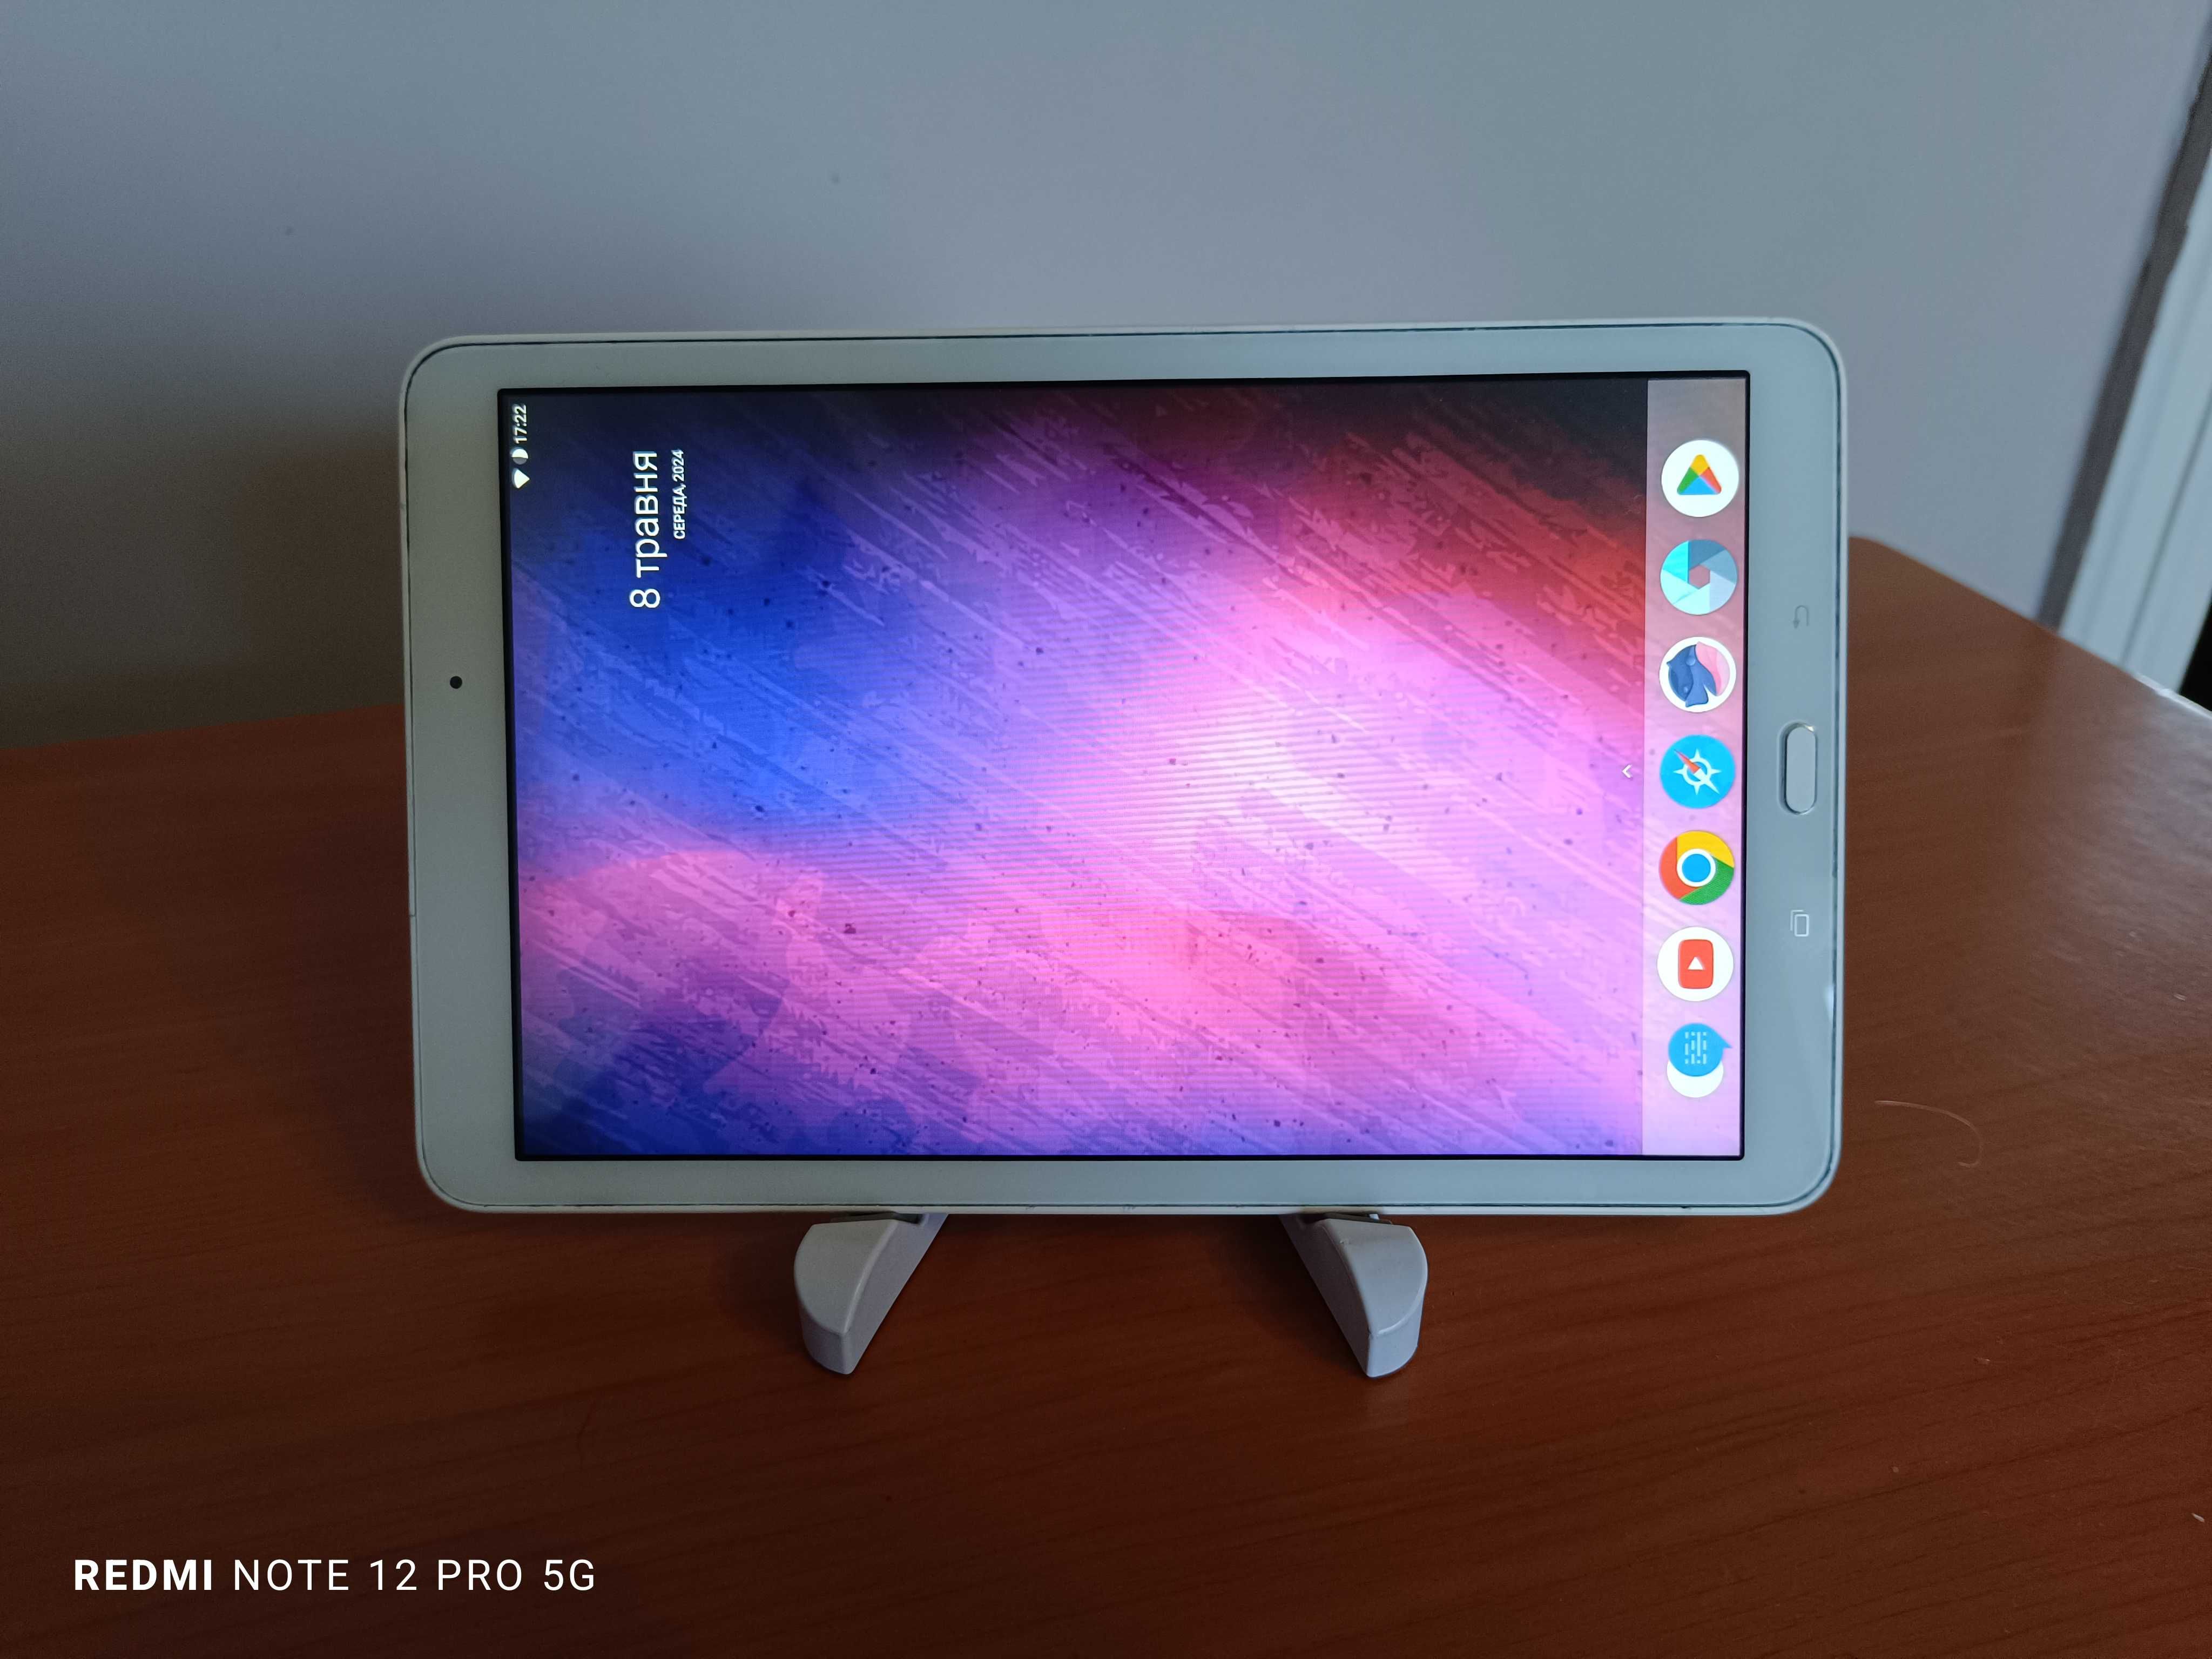 Samsung Galaxy Tab E 9.6 SM-T560